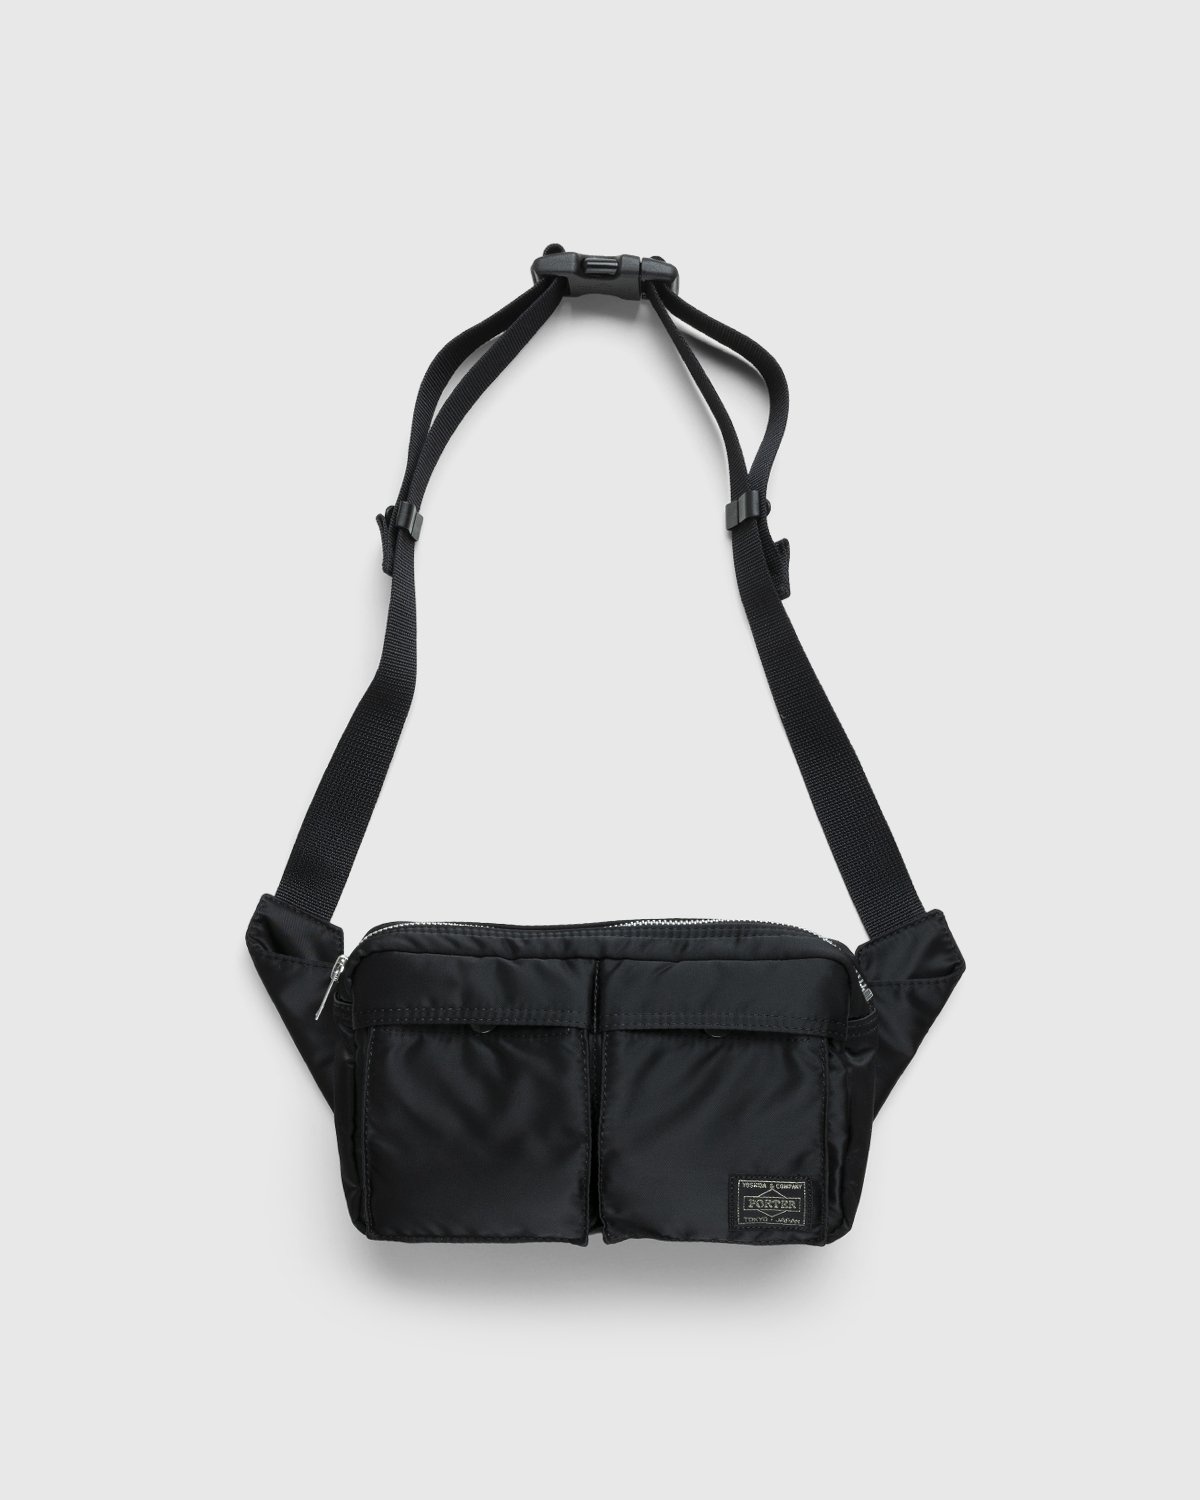 Porter-Yoshida & Co. Tanker Waist Bag - Black